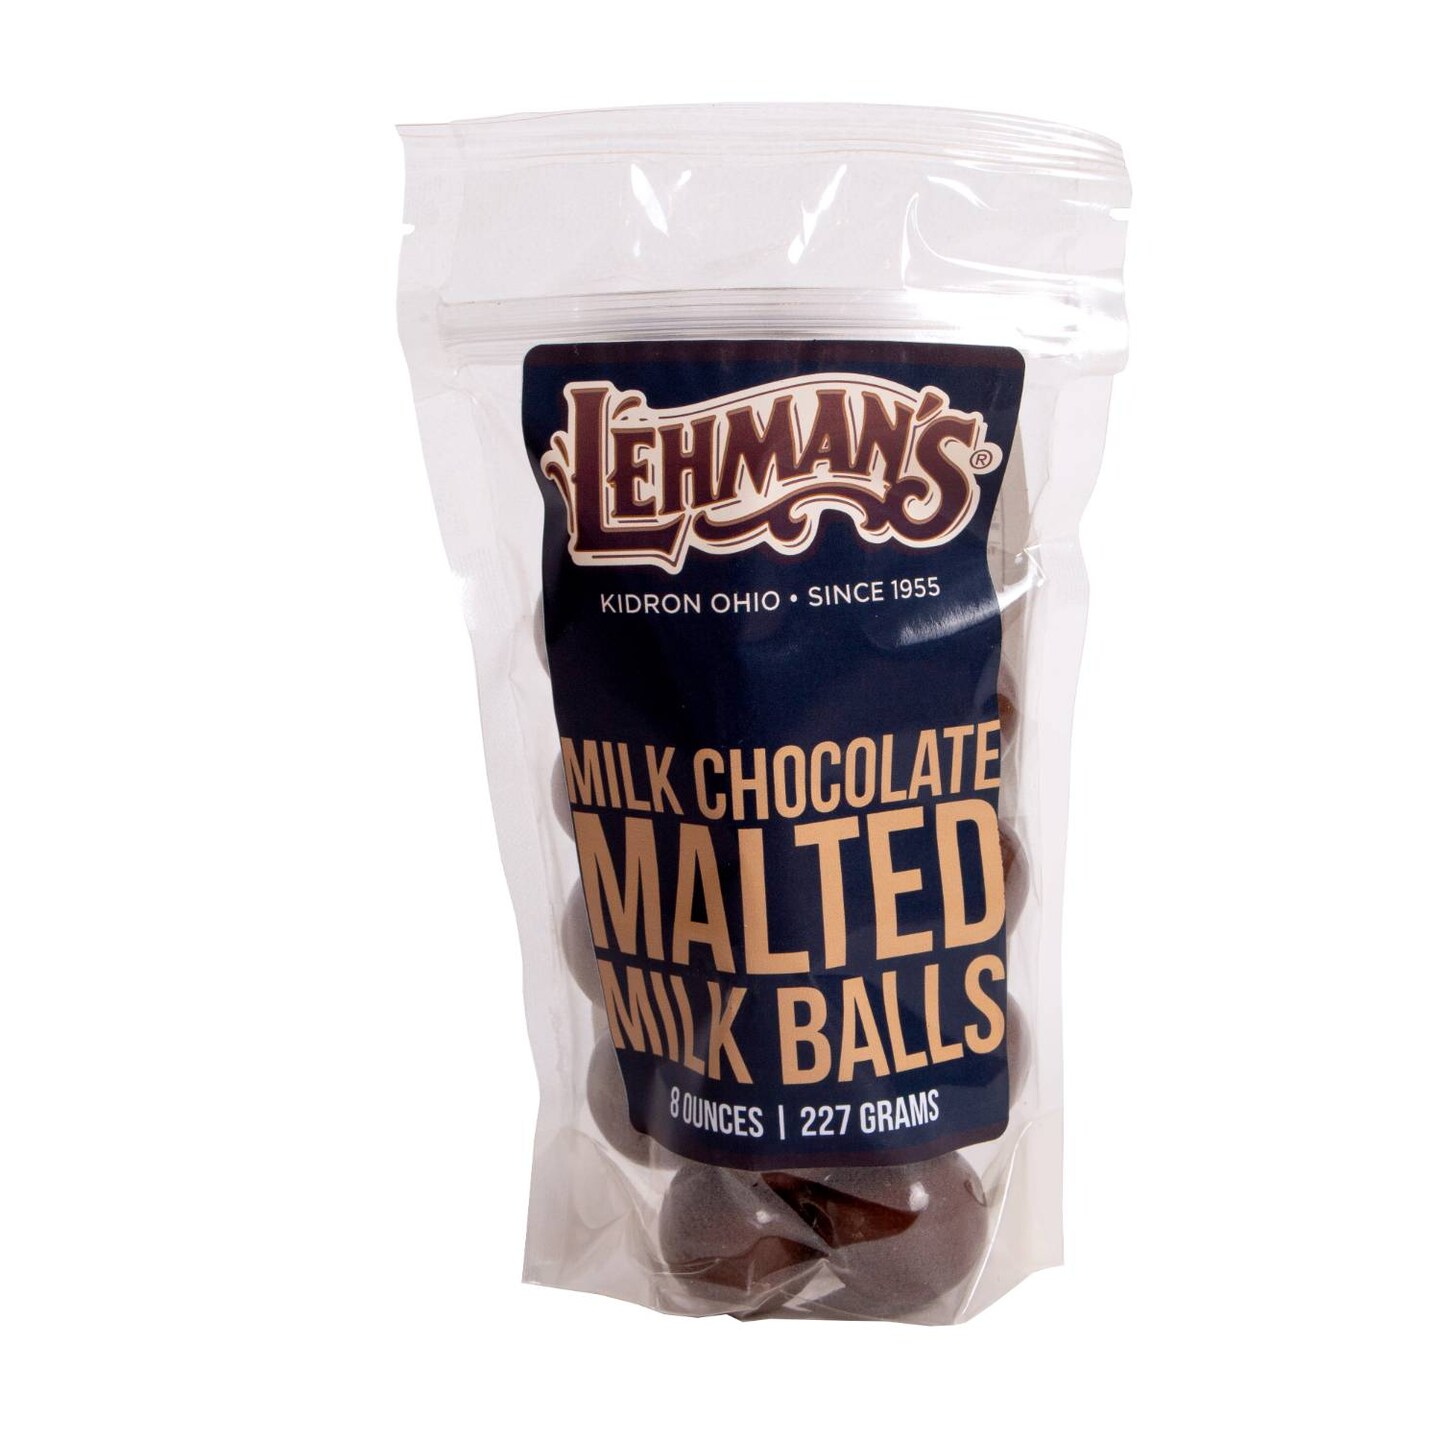 Lehman&#x27;s Chocolate Malted Milk Balls, Milk Chocolate Coated Candy, 8 oz Resealable Bag